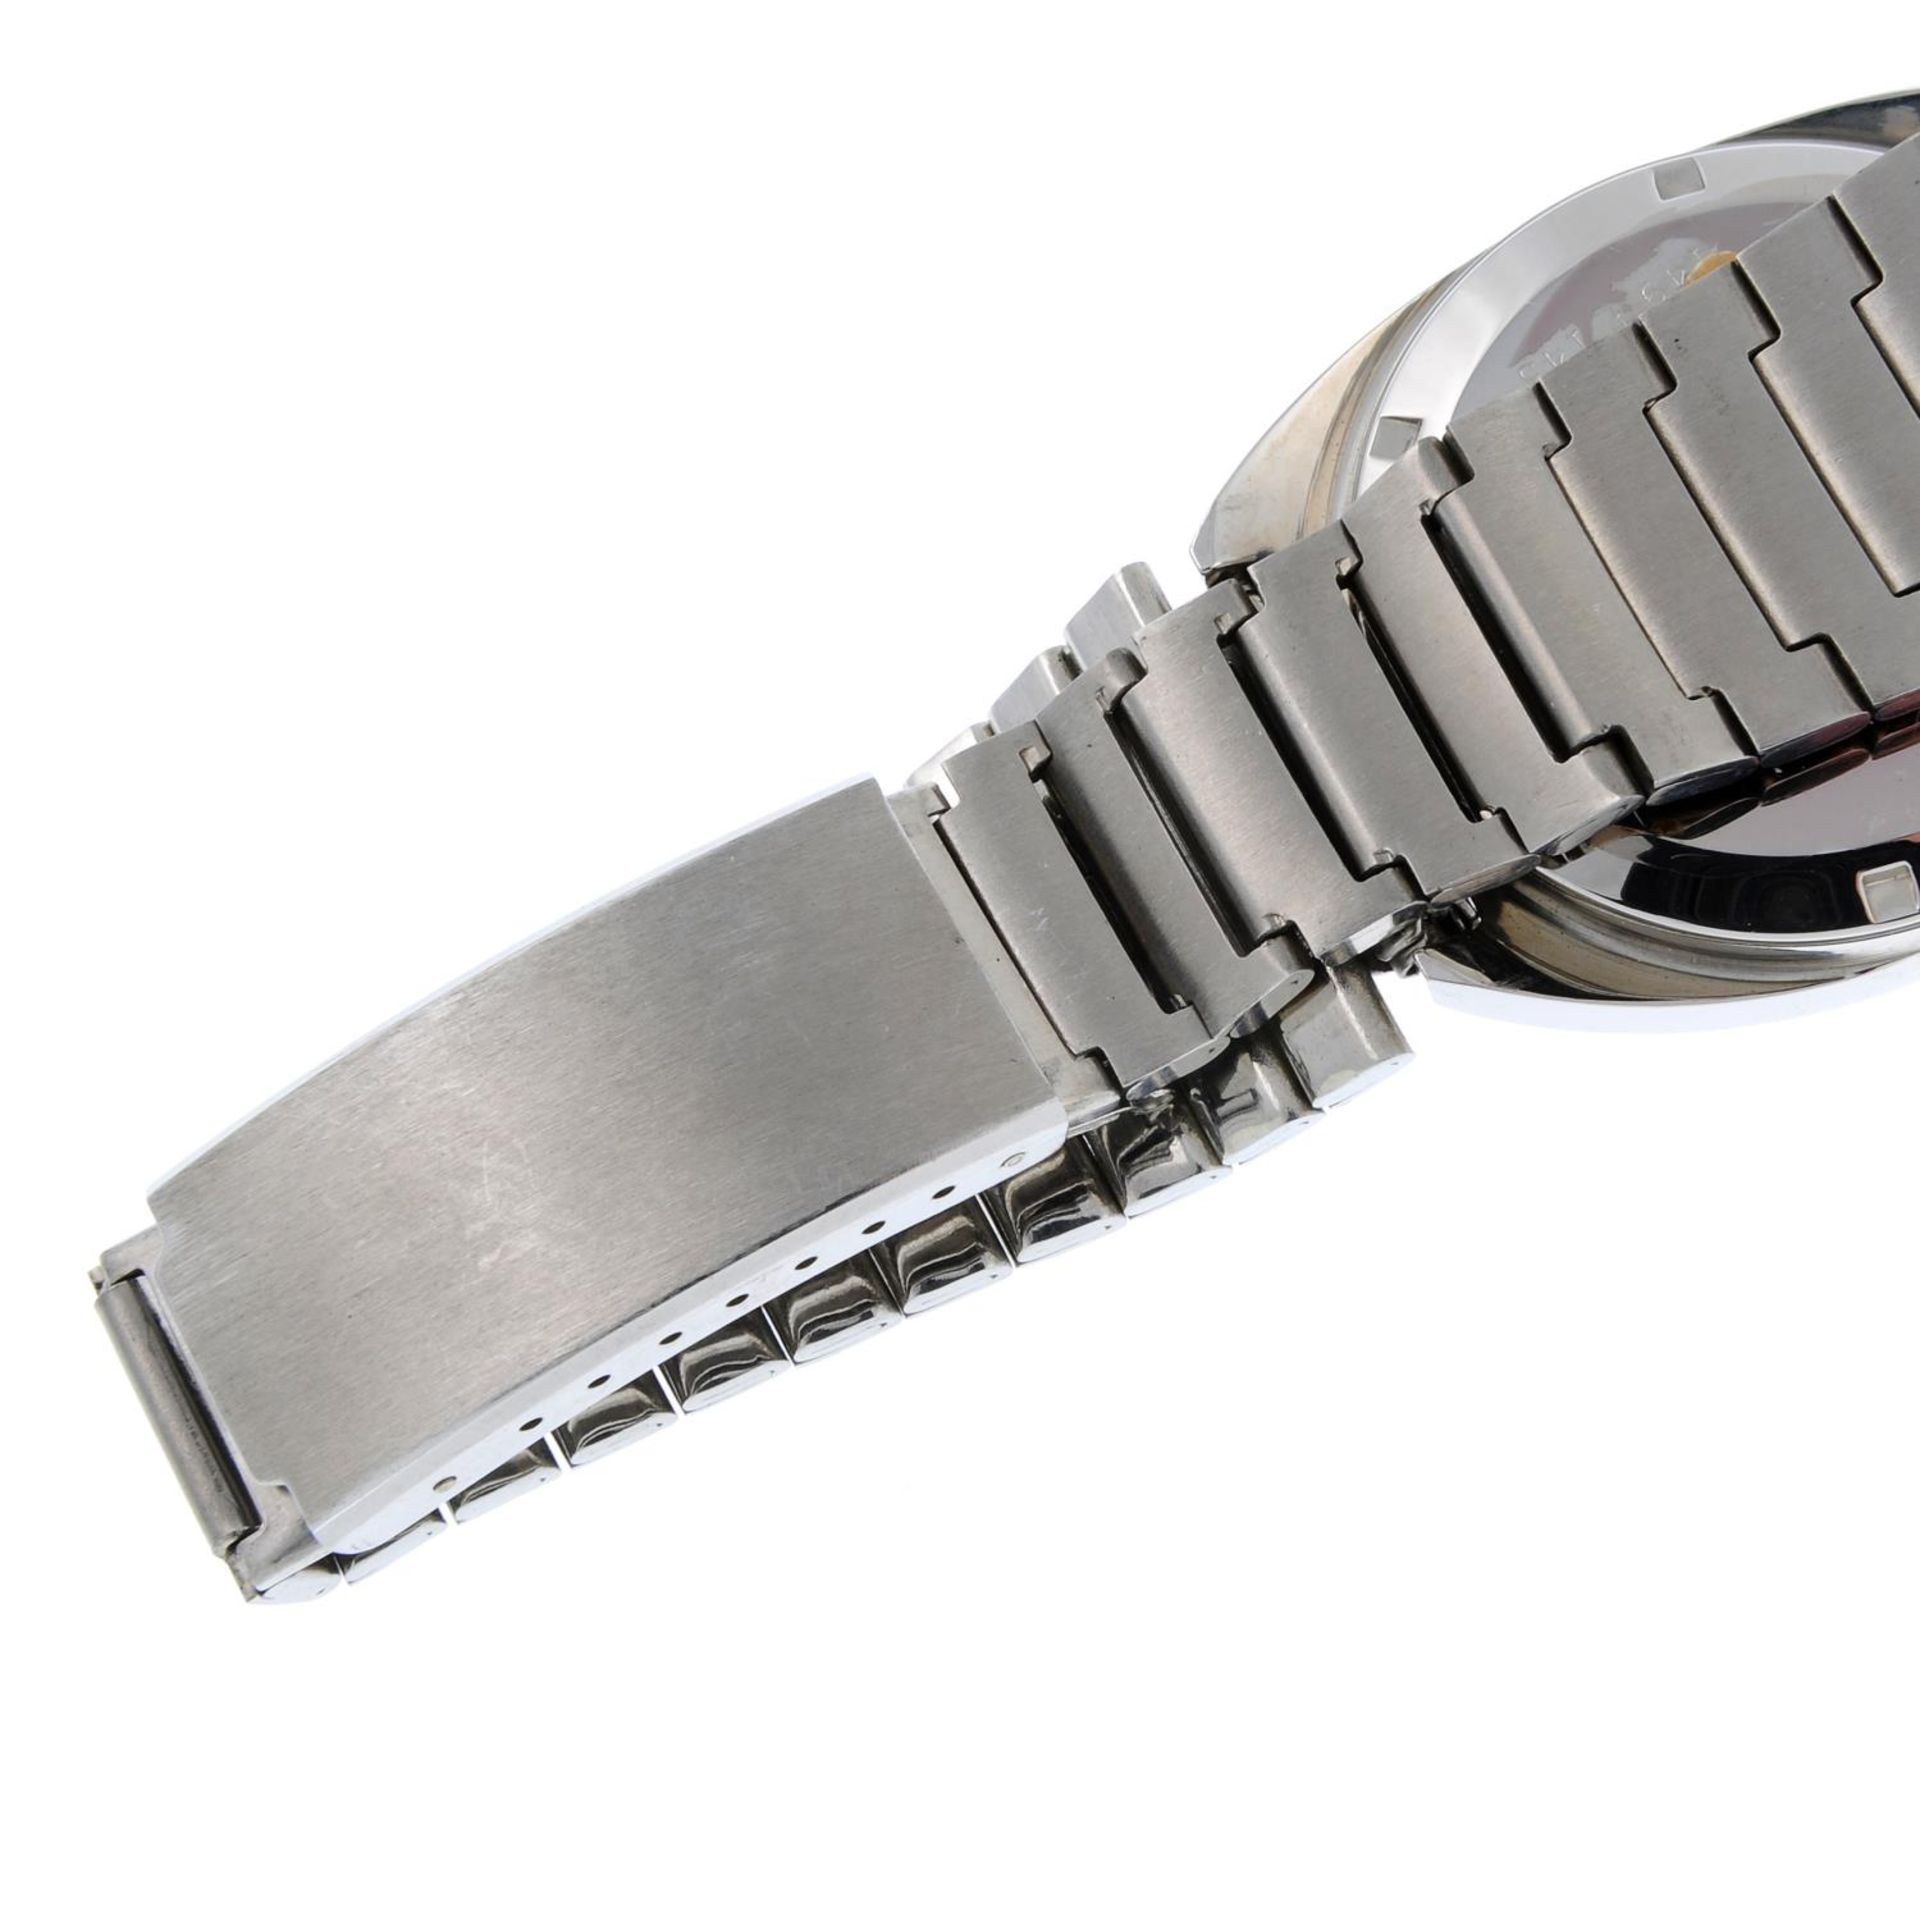 ZENITH - a gentleman's Sporto bracelet watch. - Image 2 of 4